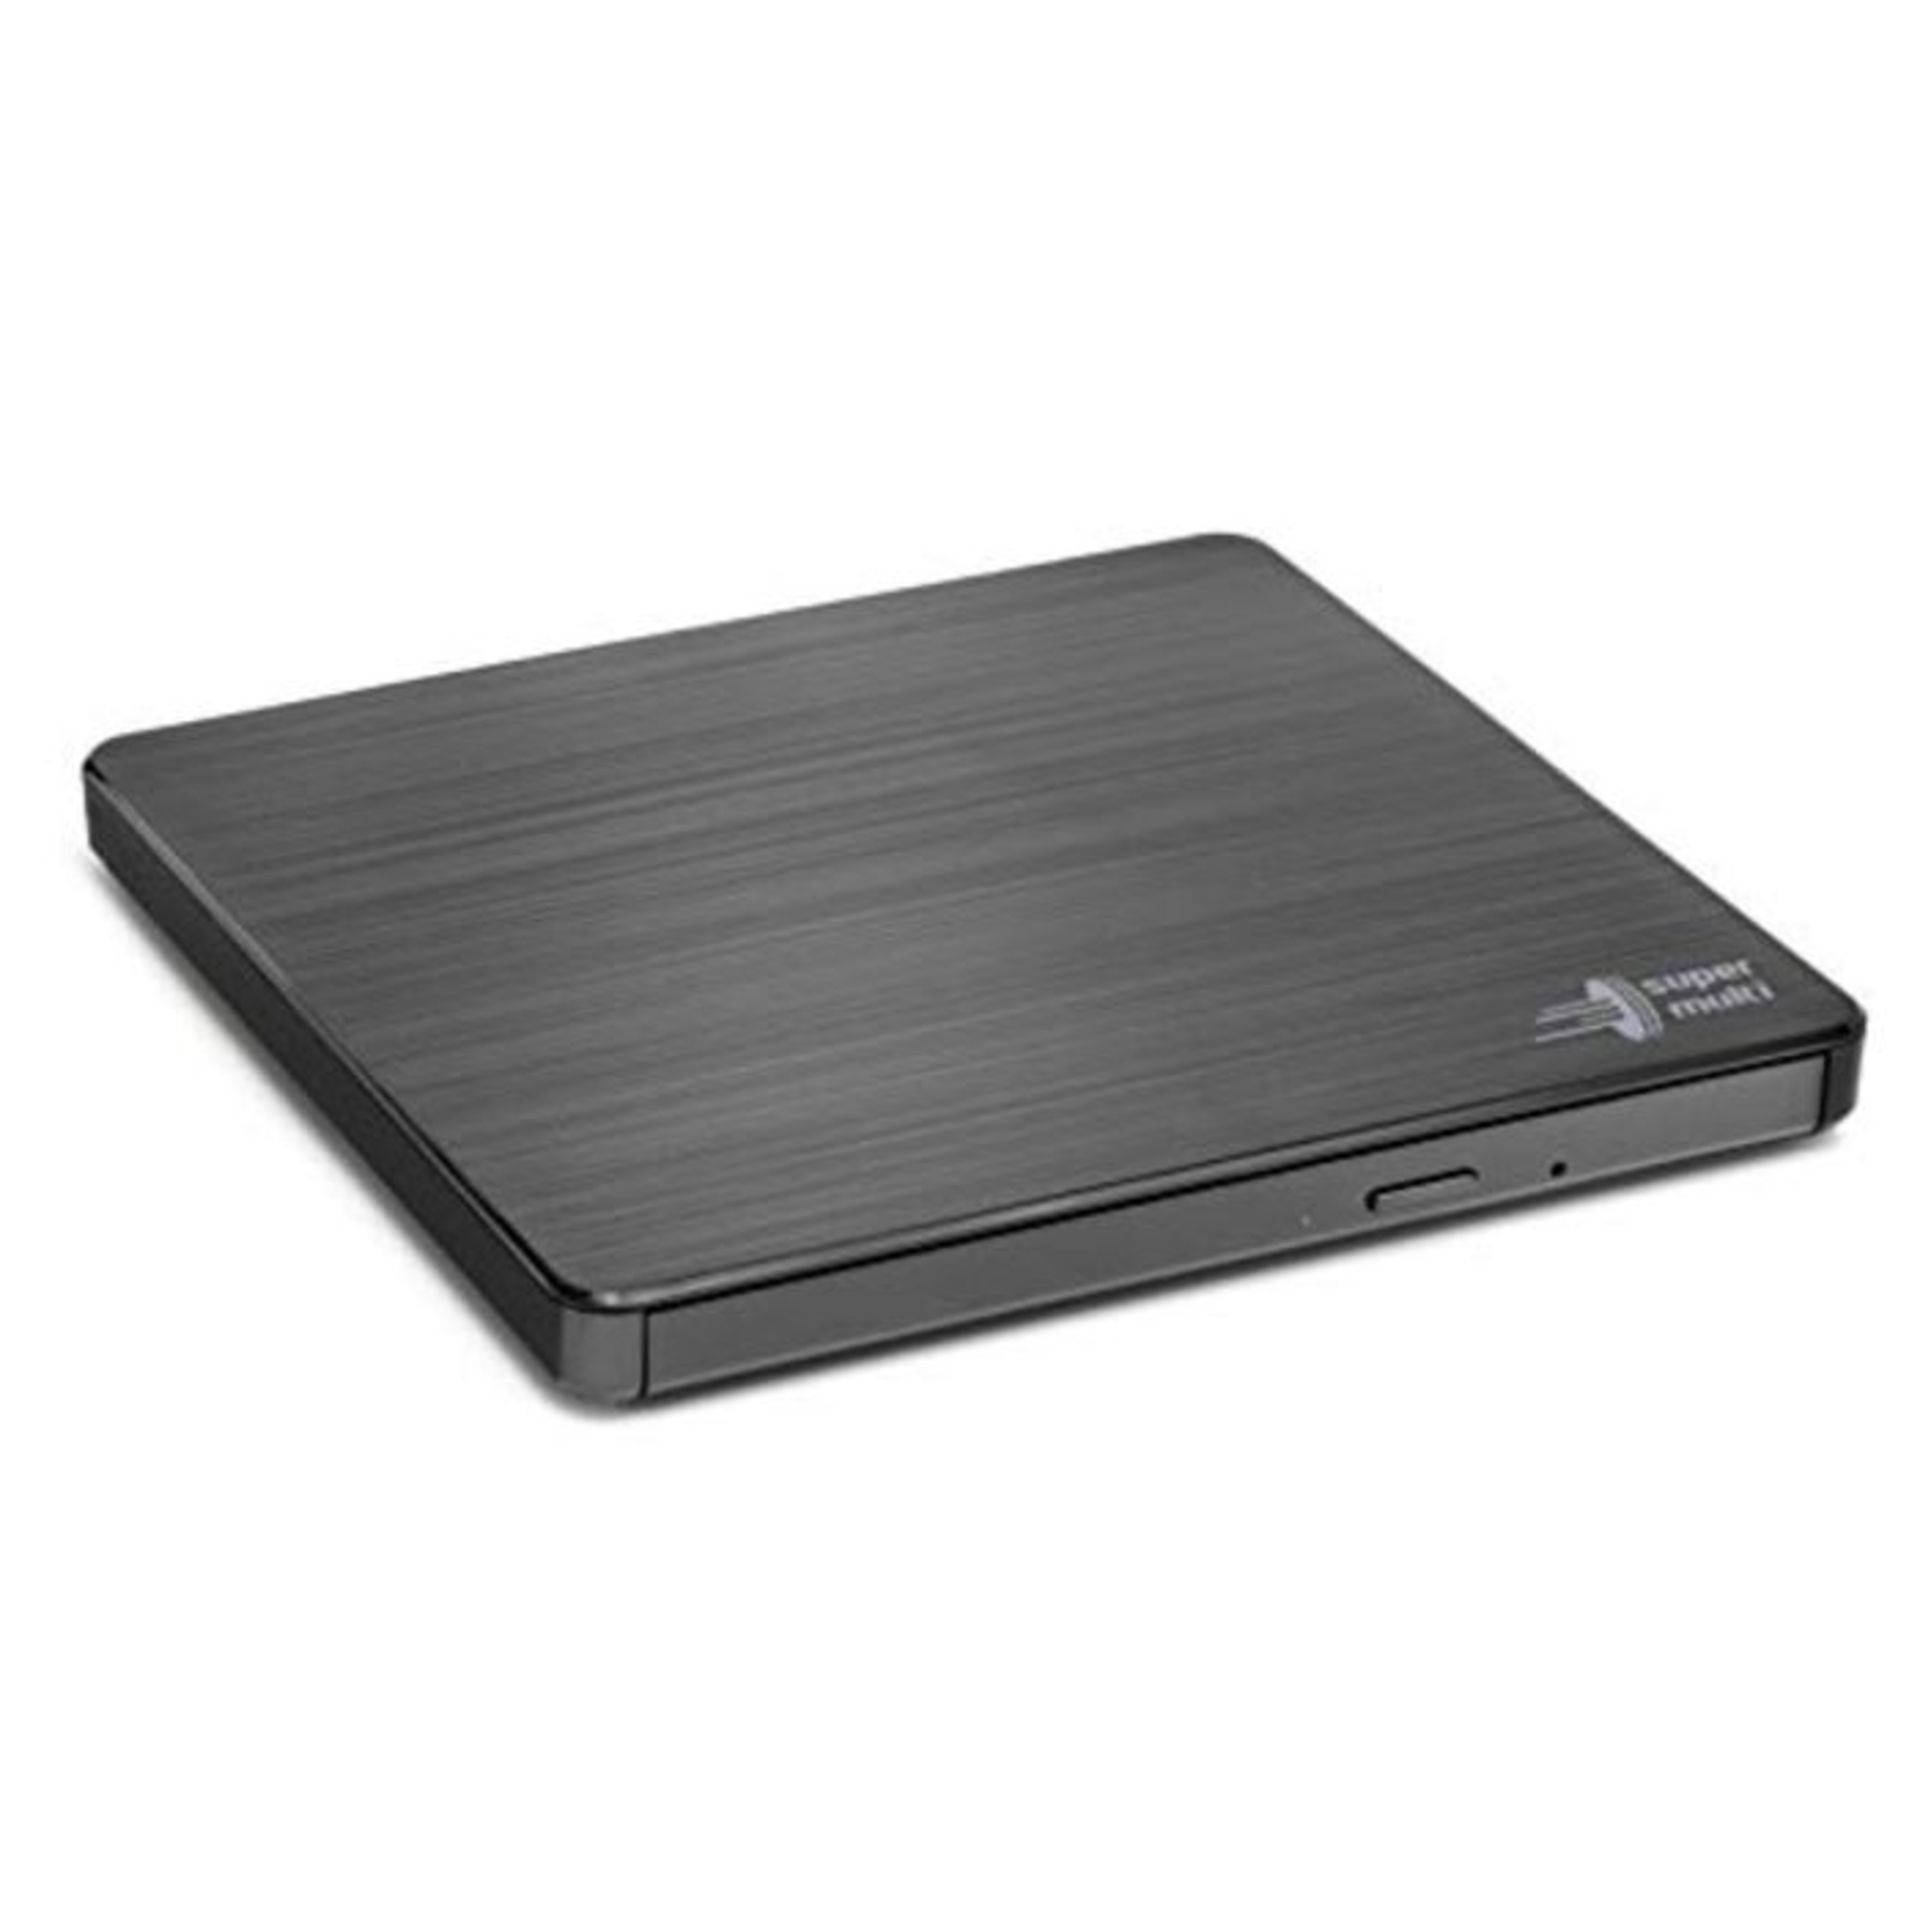 Hitachi-LG 150465 GP60 Externes CD/DVD Laufwerk, Portabler Slim Brenner, USB 2 (3.0 ko